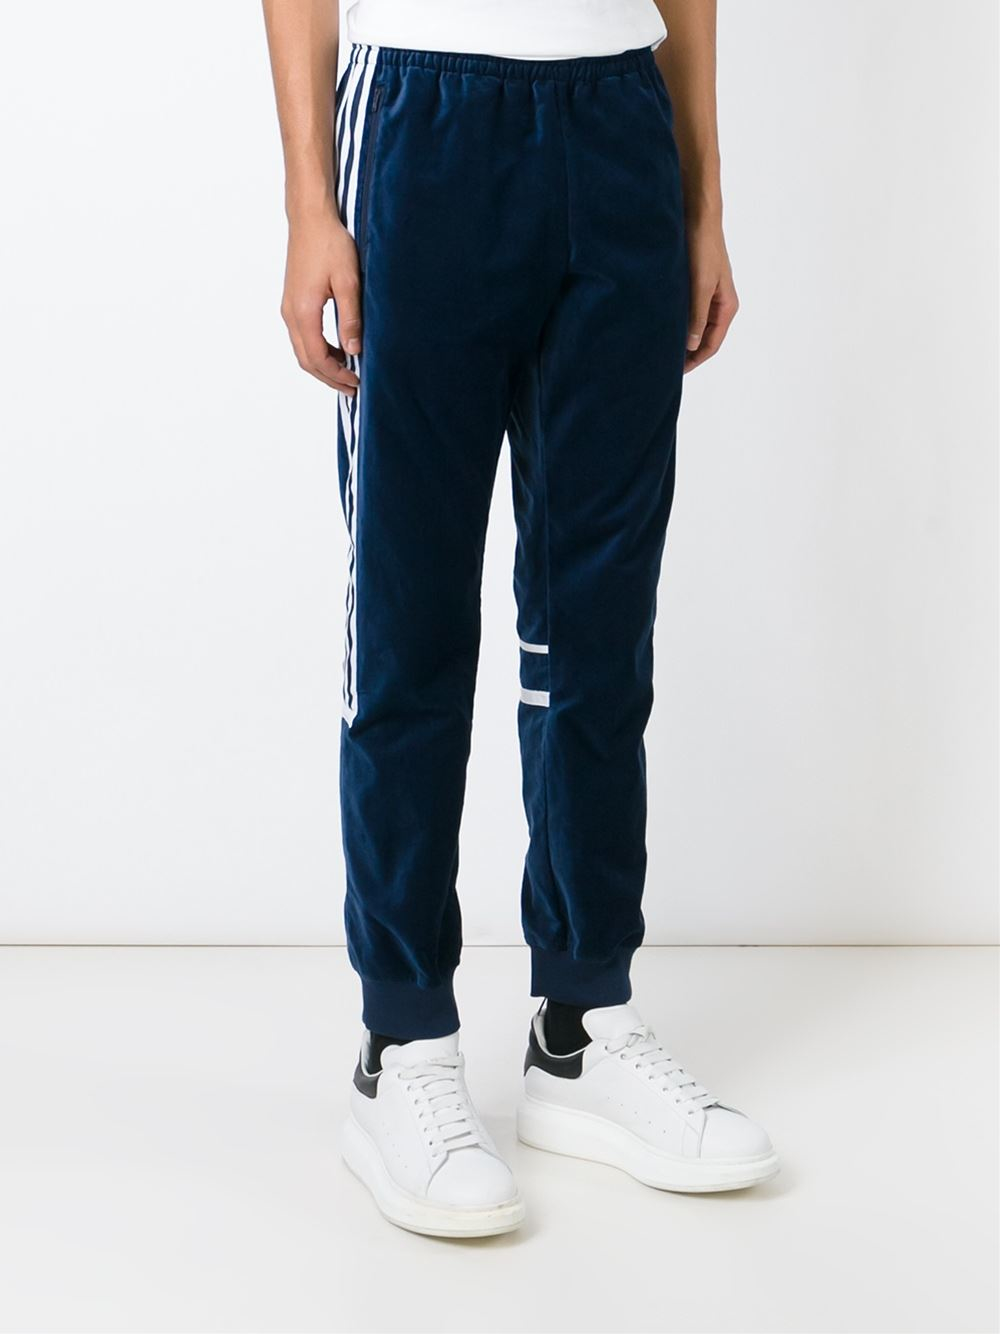 adidas Originals 'clr 84' Track Pants in Blue for Men - Lyst